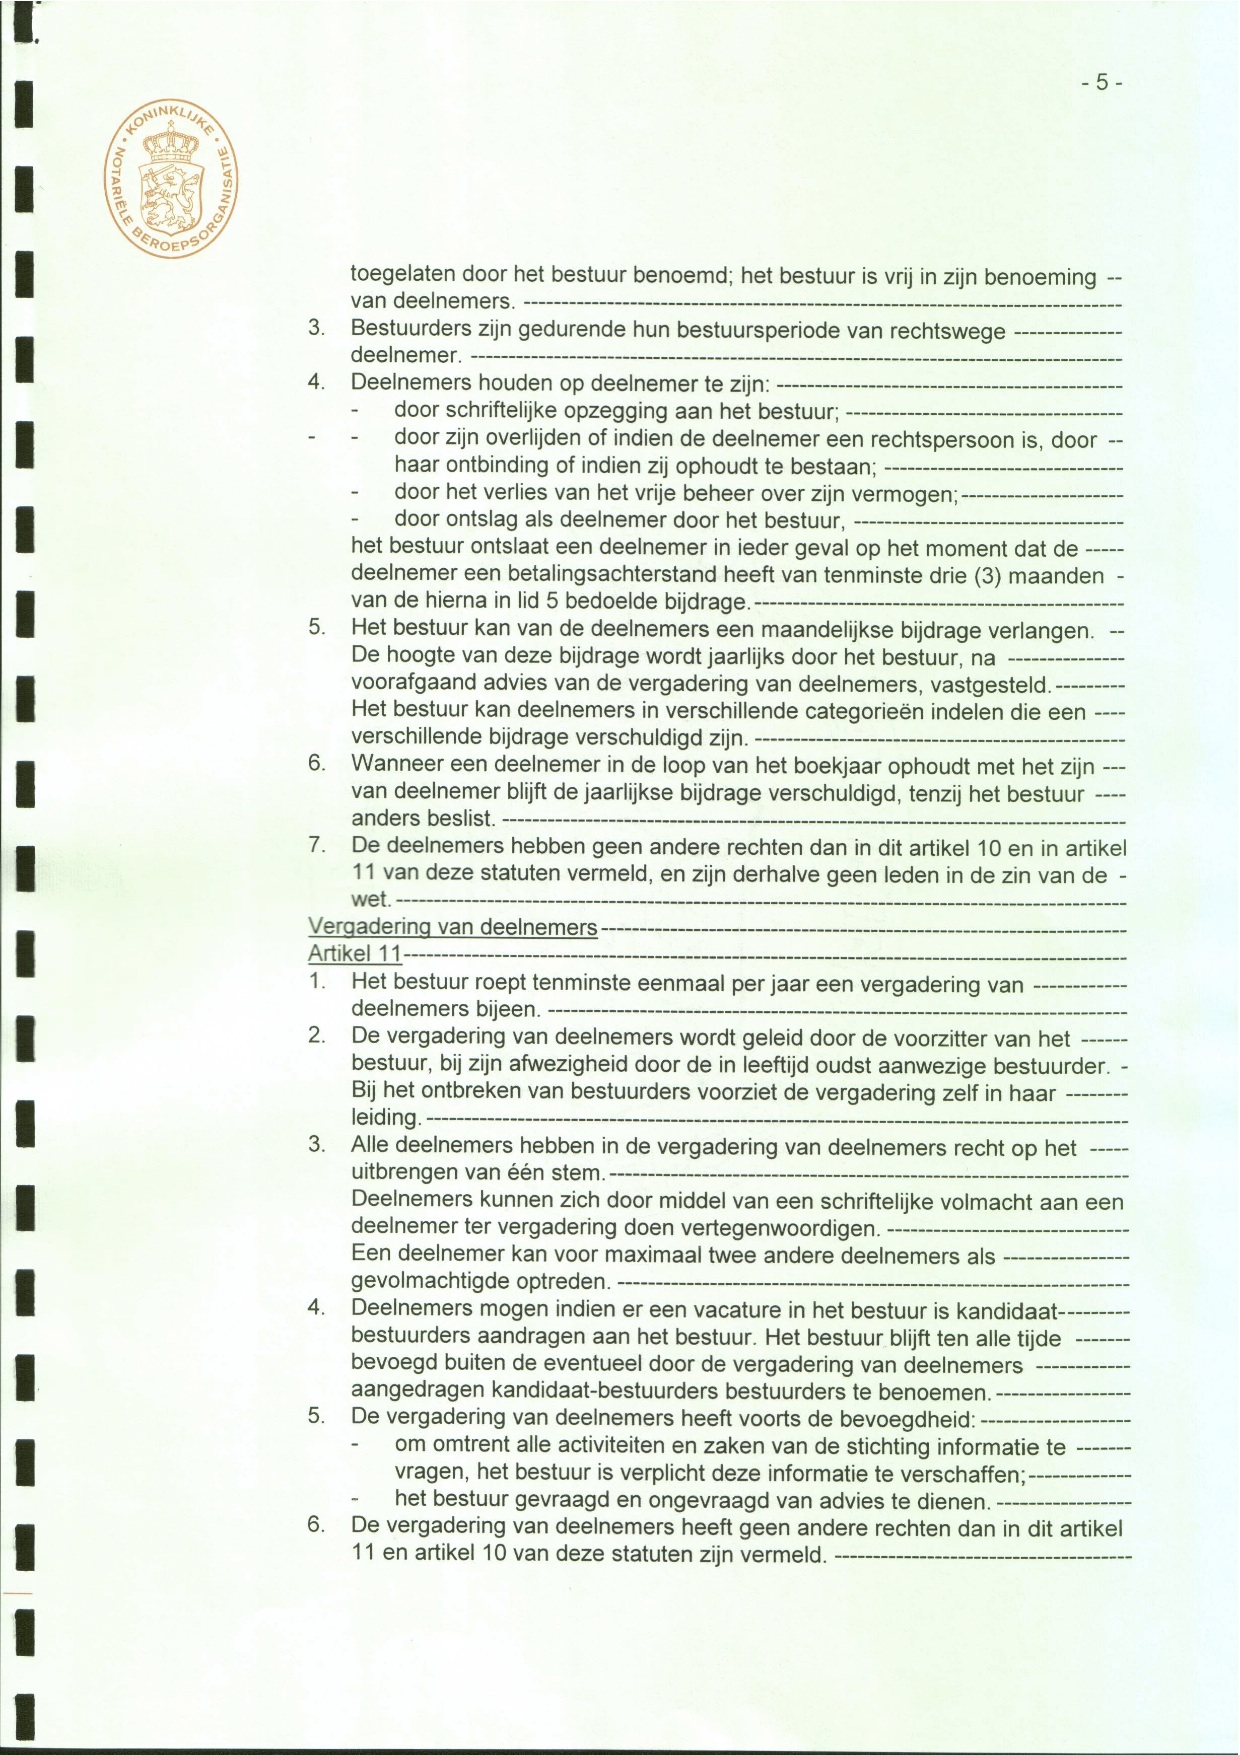 Statuten 15 apr 2010 pagina 5.jpg